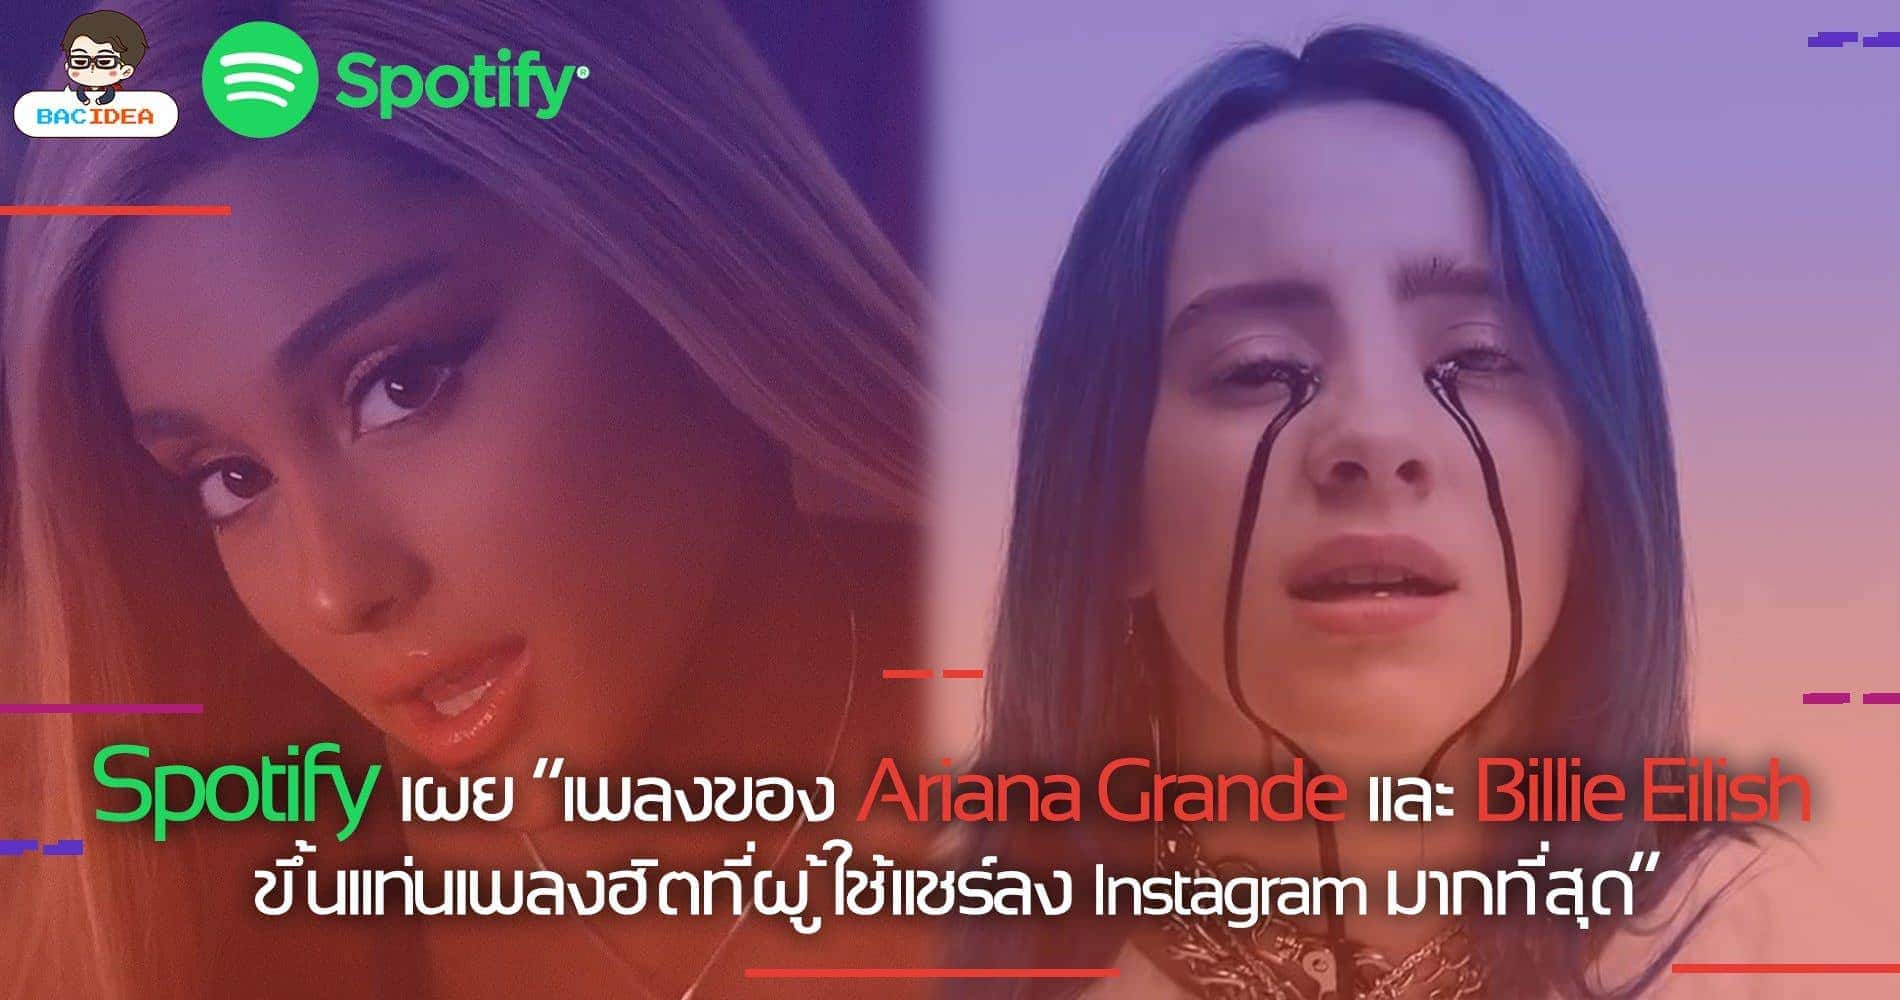 Spotify เผย เพลงของ Ariana Grande และ Billie Eilish ขึ้นแท่นเพลงฮิตที่ผู้ใช้แชร์ลง Instagram มากที่สุด 1